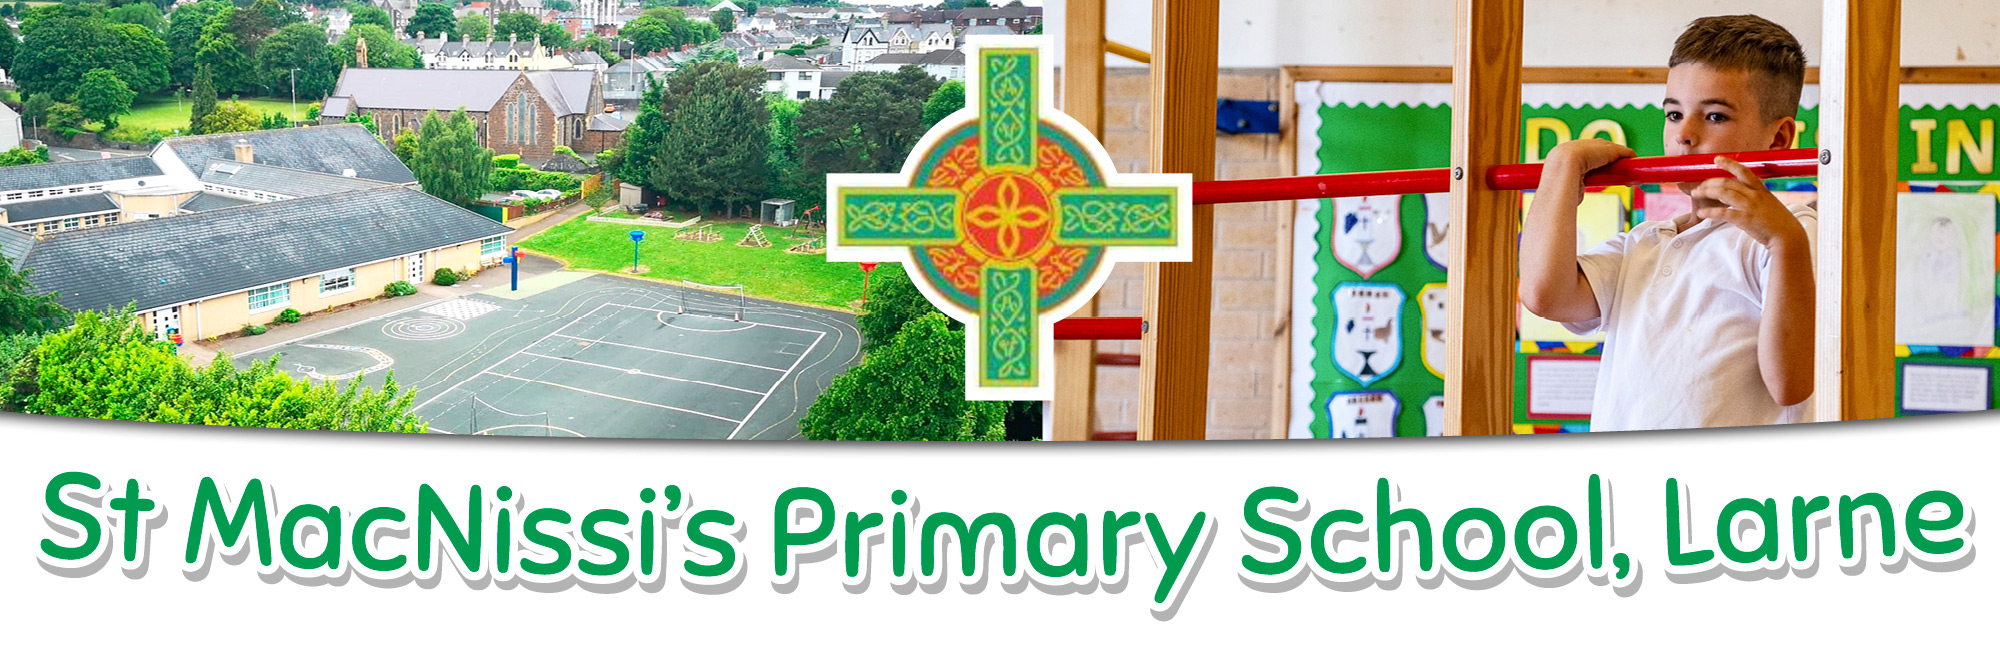 St MacNissi's Primary School, Larne